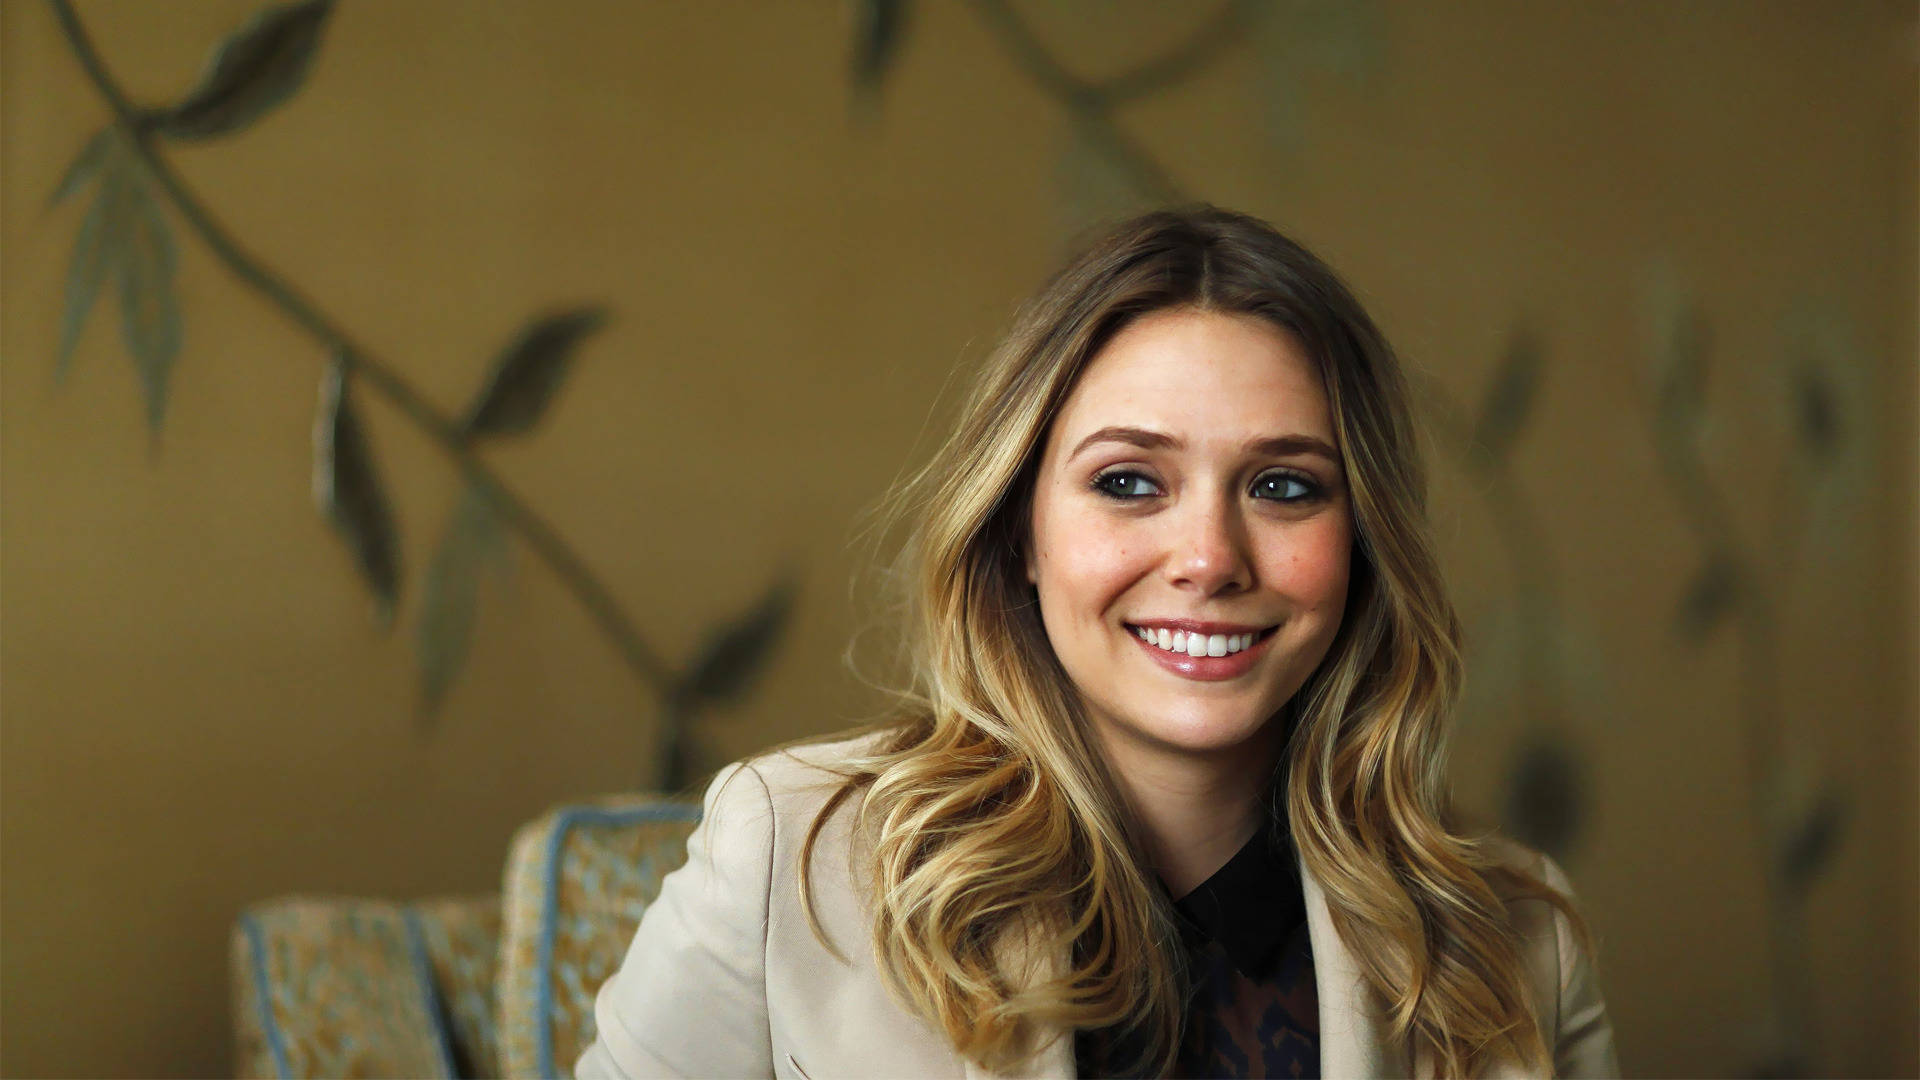 Elizabeth Olsen Stunning Smile Background